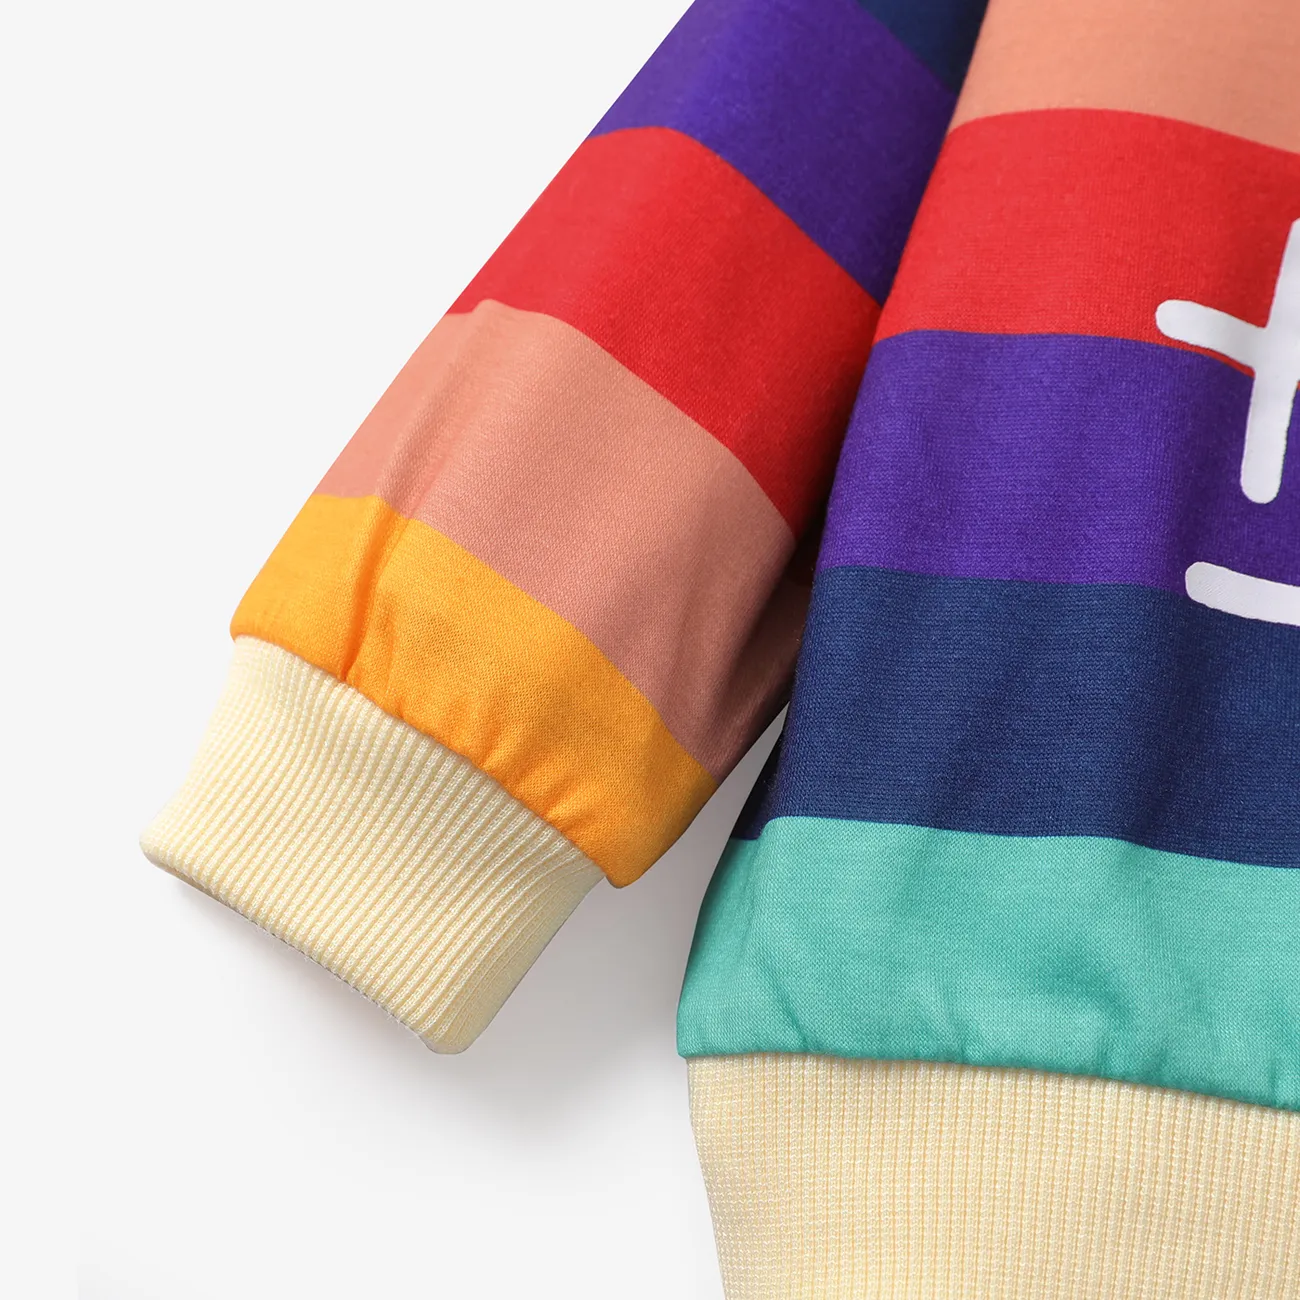 Baby Boy/Girl Heart & Letter Print Rainbow Colorblock Long-sleeve Sweatshirt Multi-color big image 1